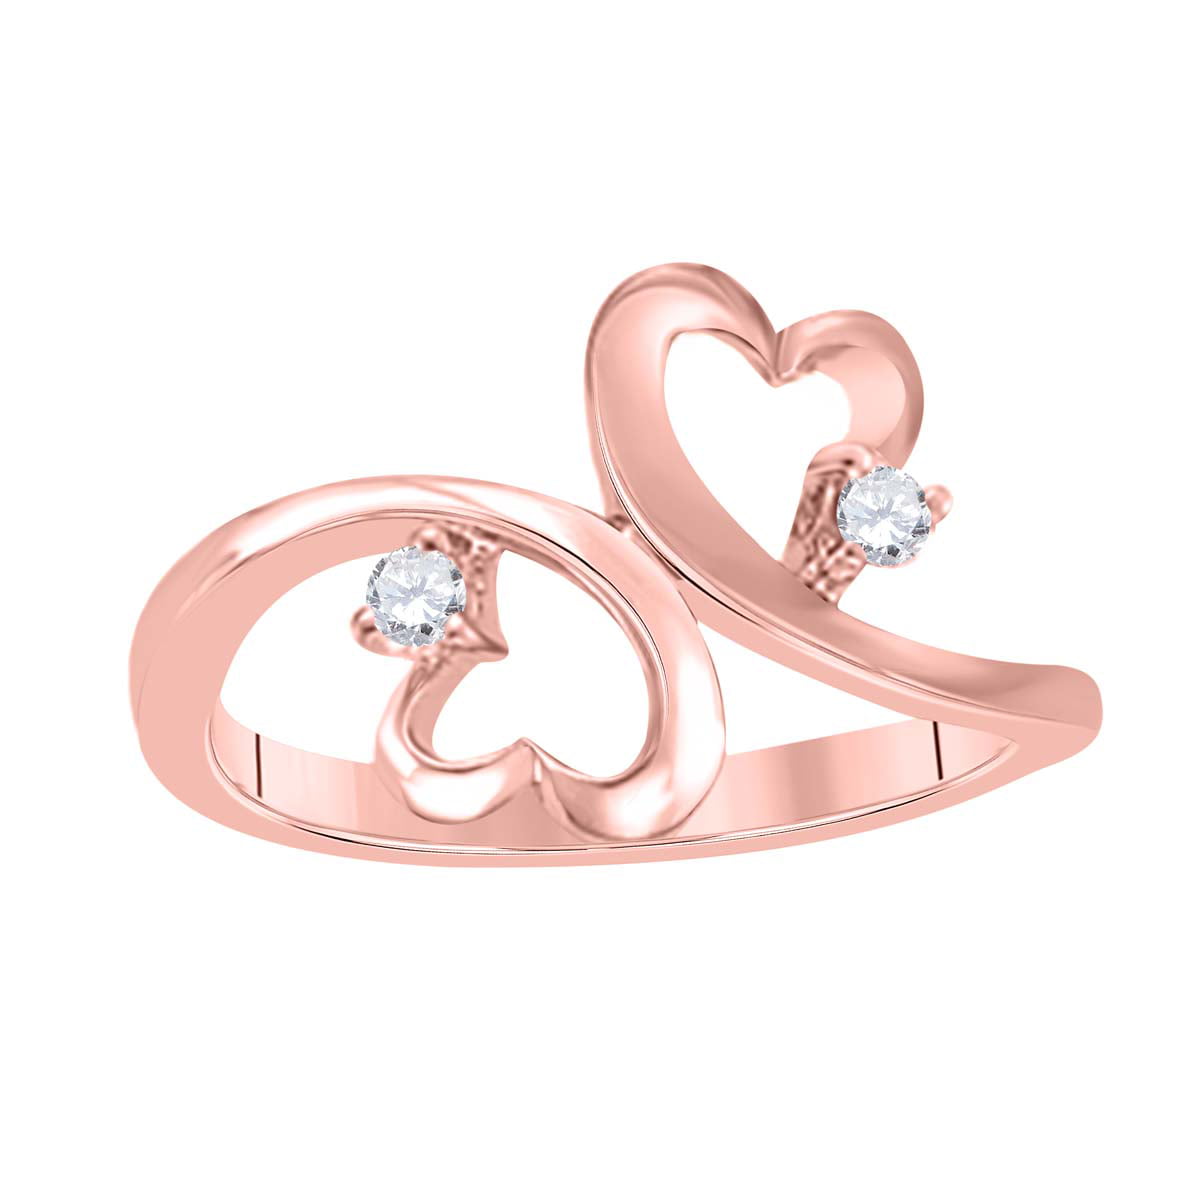 Buy quality 916 Gold Hallmark Light Weight Diamond Ring in Ahmedabad